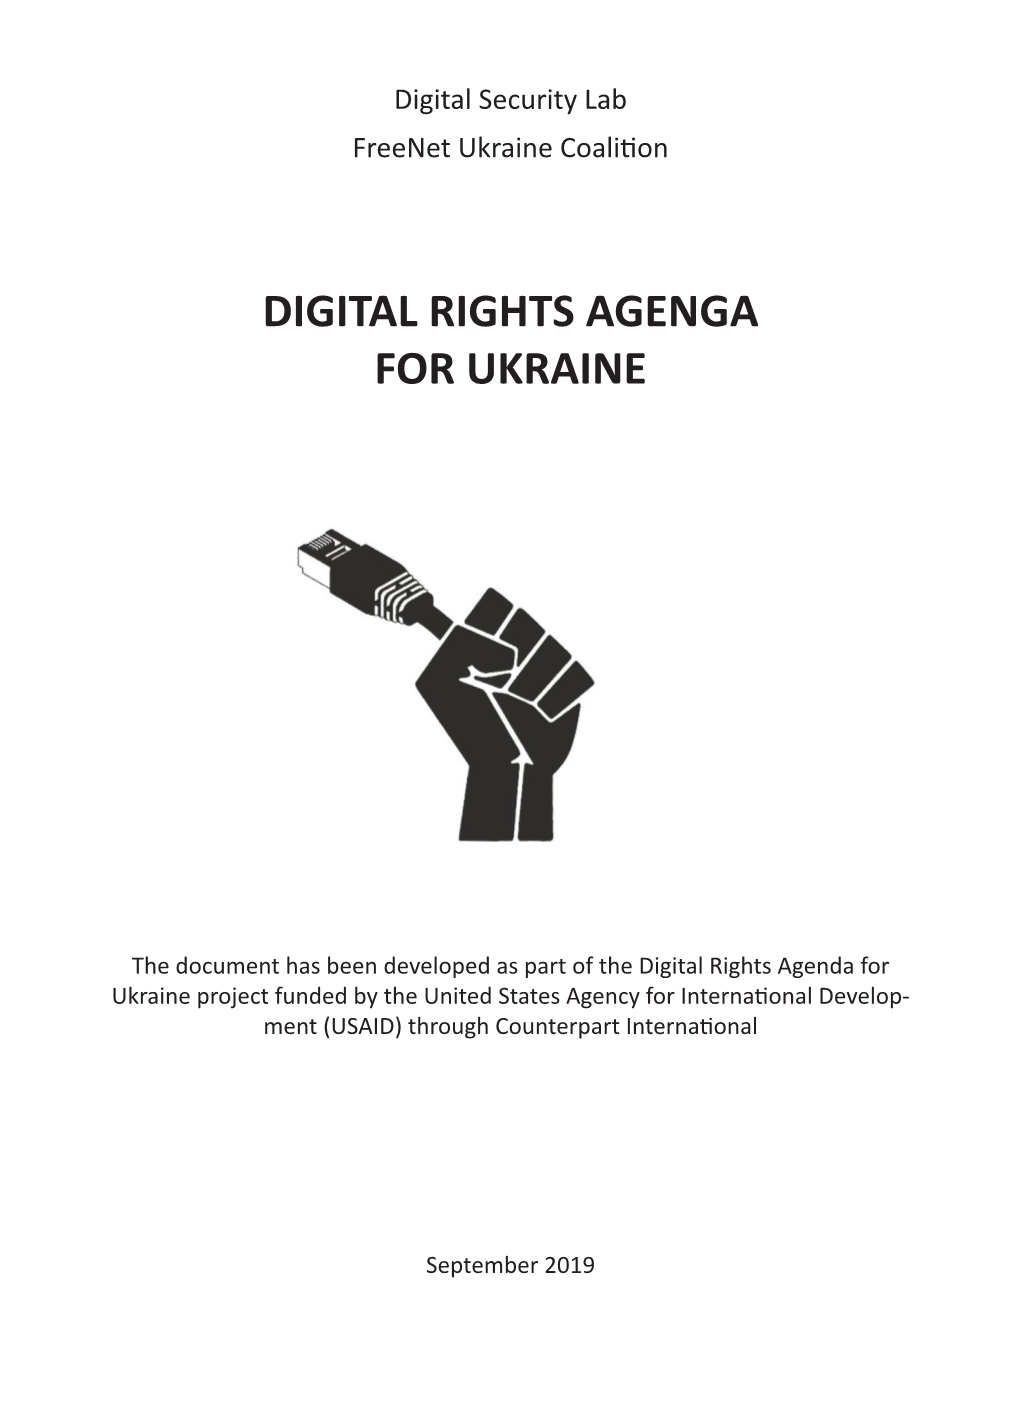 Digital Rights Agenga for Ukraine